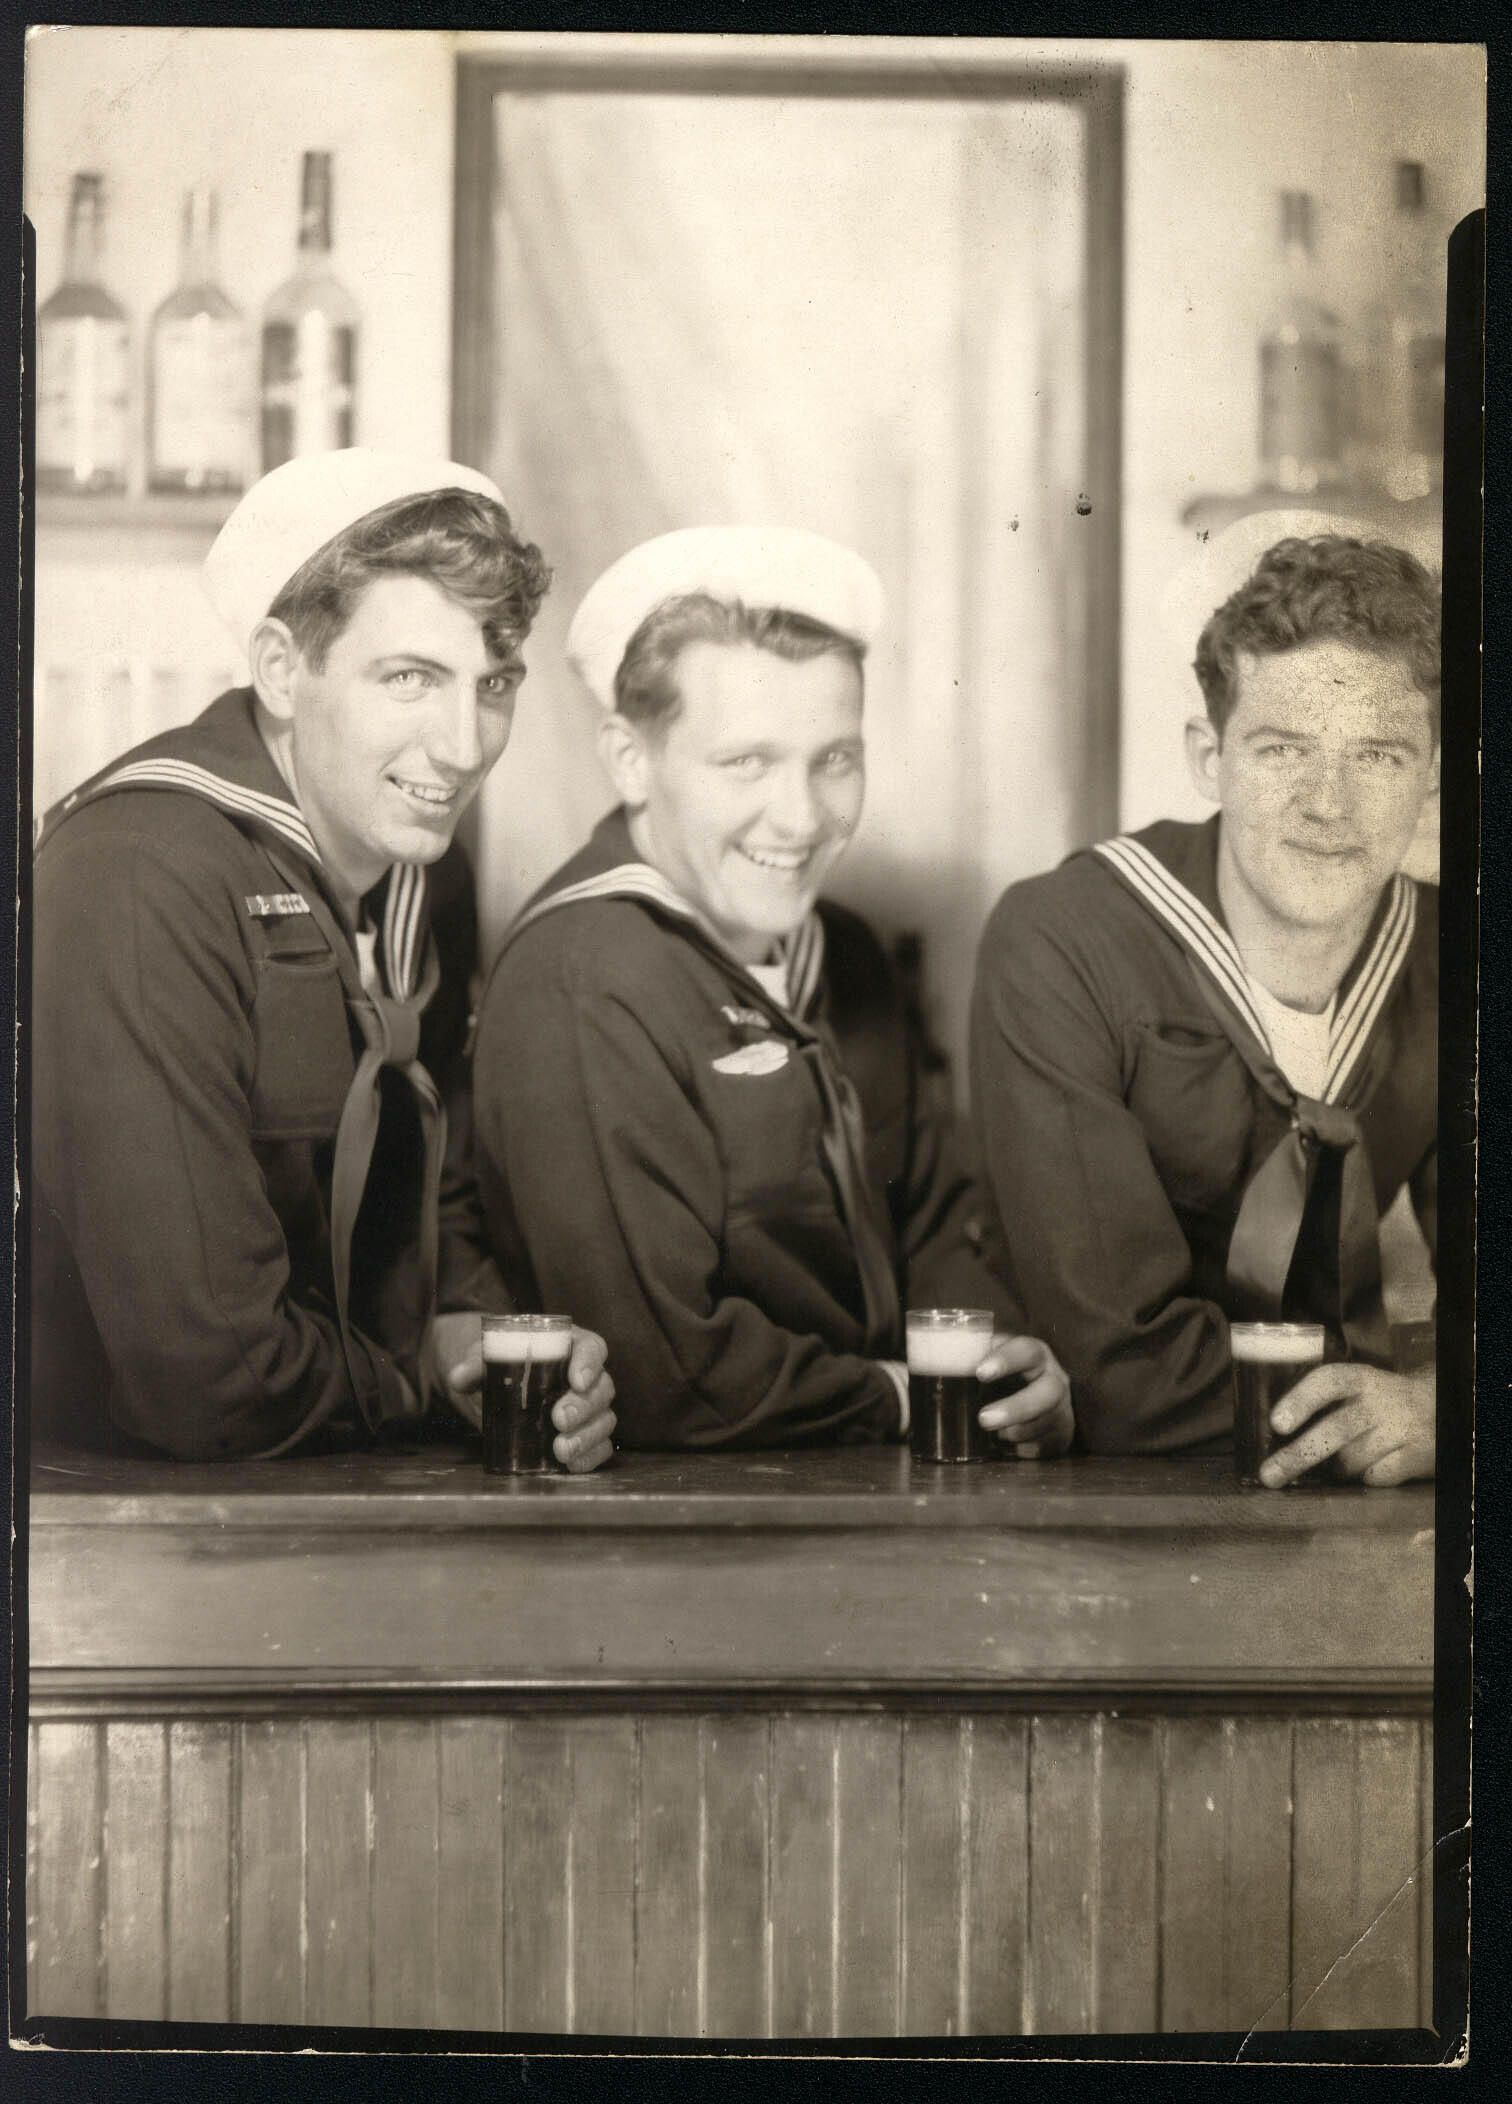 Primary Image of USS Hancock (CV-19) Sailors Enjoying a Beer